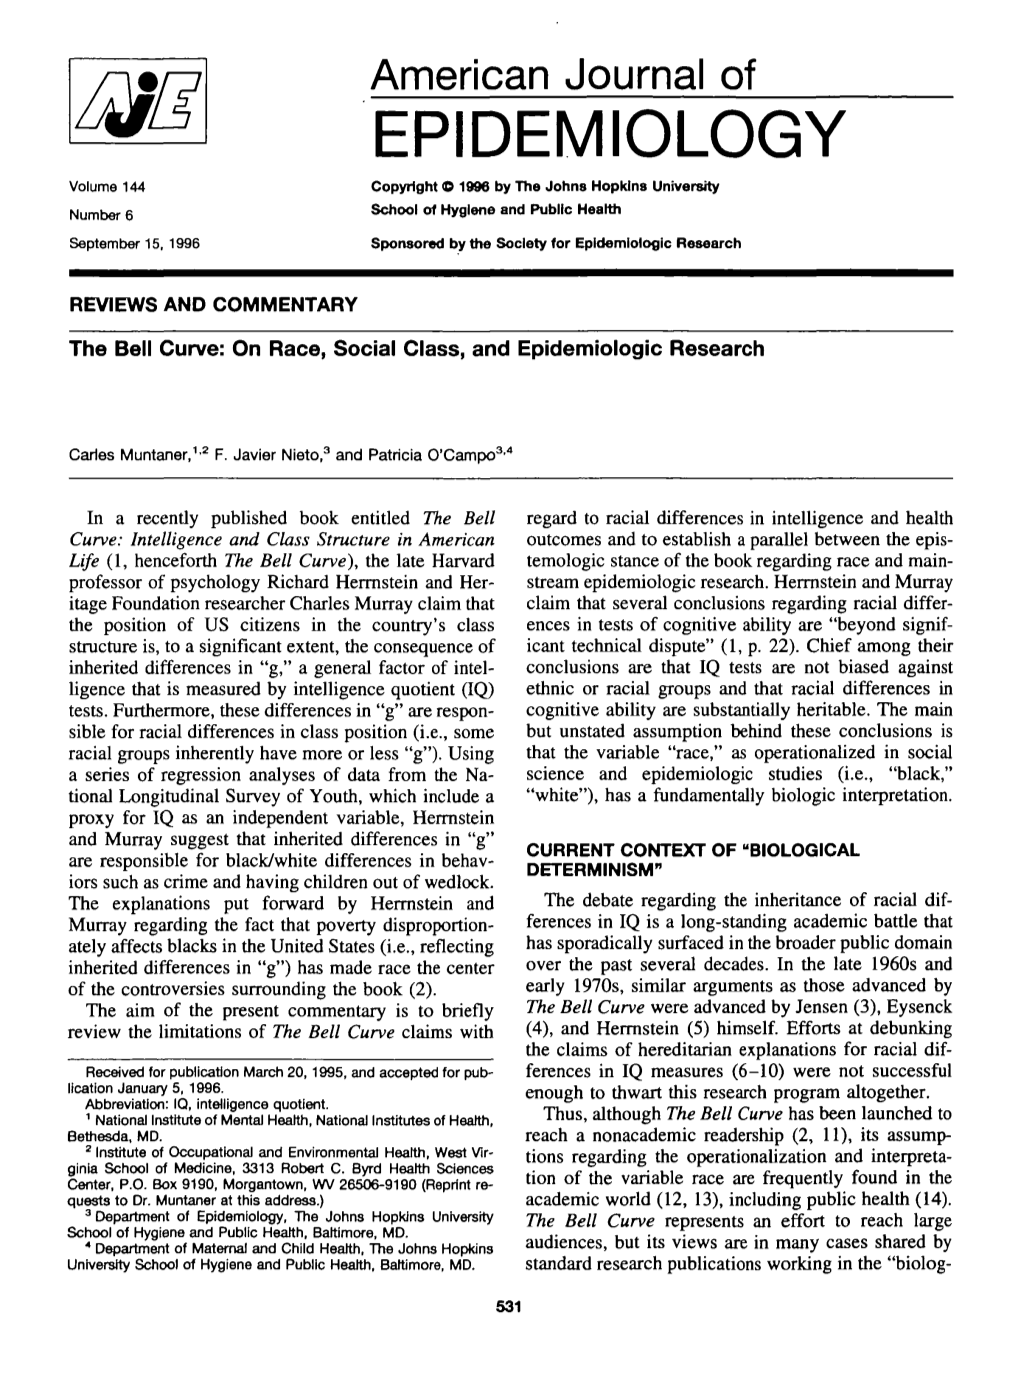 EPIDEMIOLOGY Volume 144 Copyright © 1996 by the Johns Hopkins University